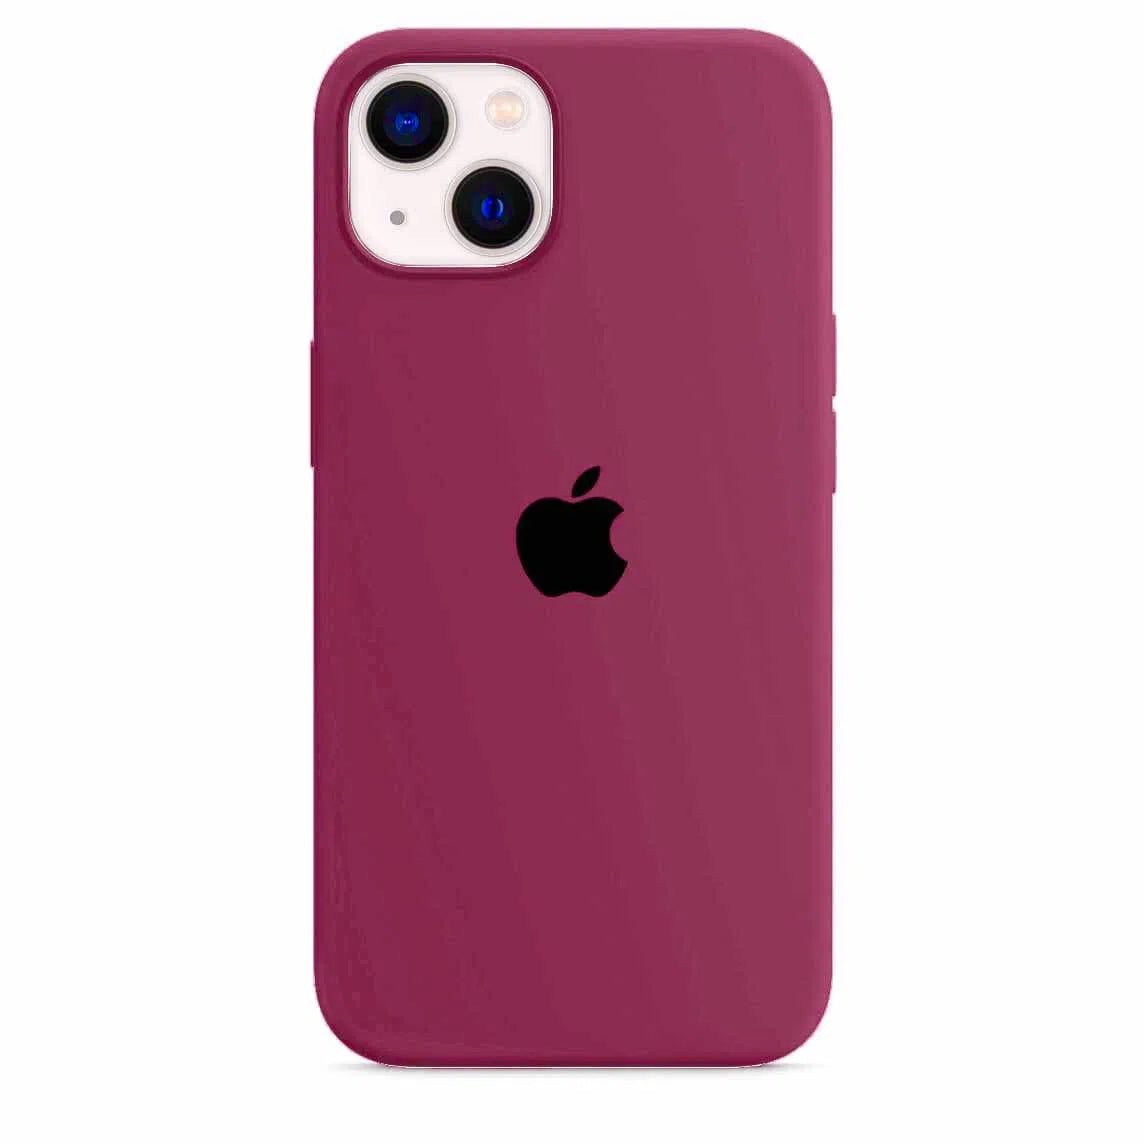 Husa iPhone Silicone Case Dark Rose (Burgundy) Anca's Store 13 mini 